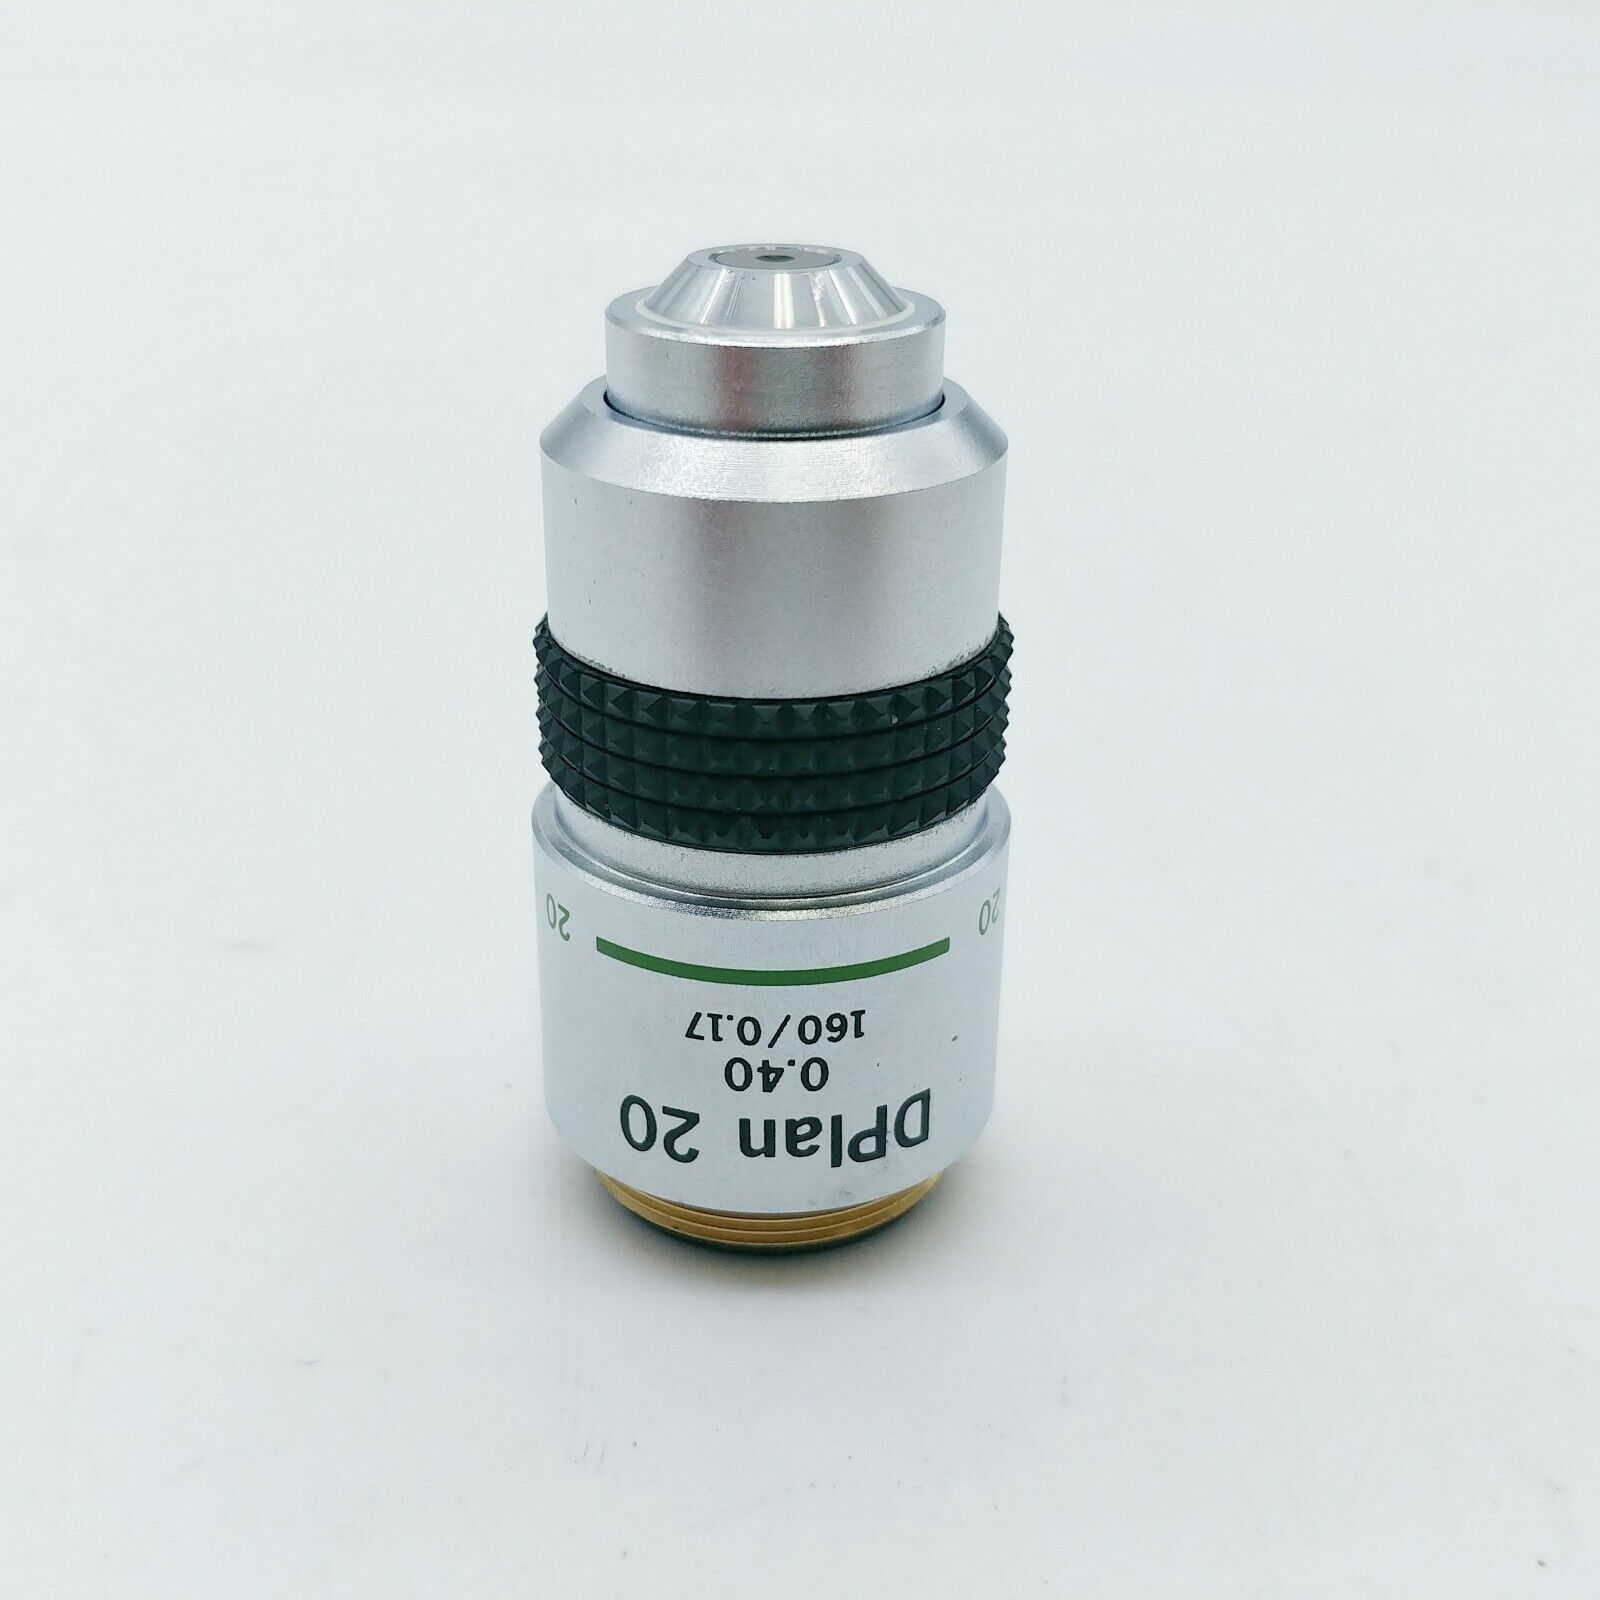 olympus – Microscope Marketplace